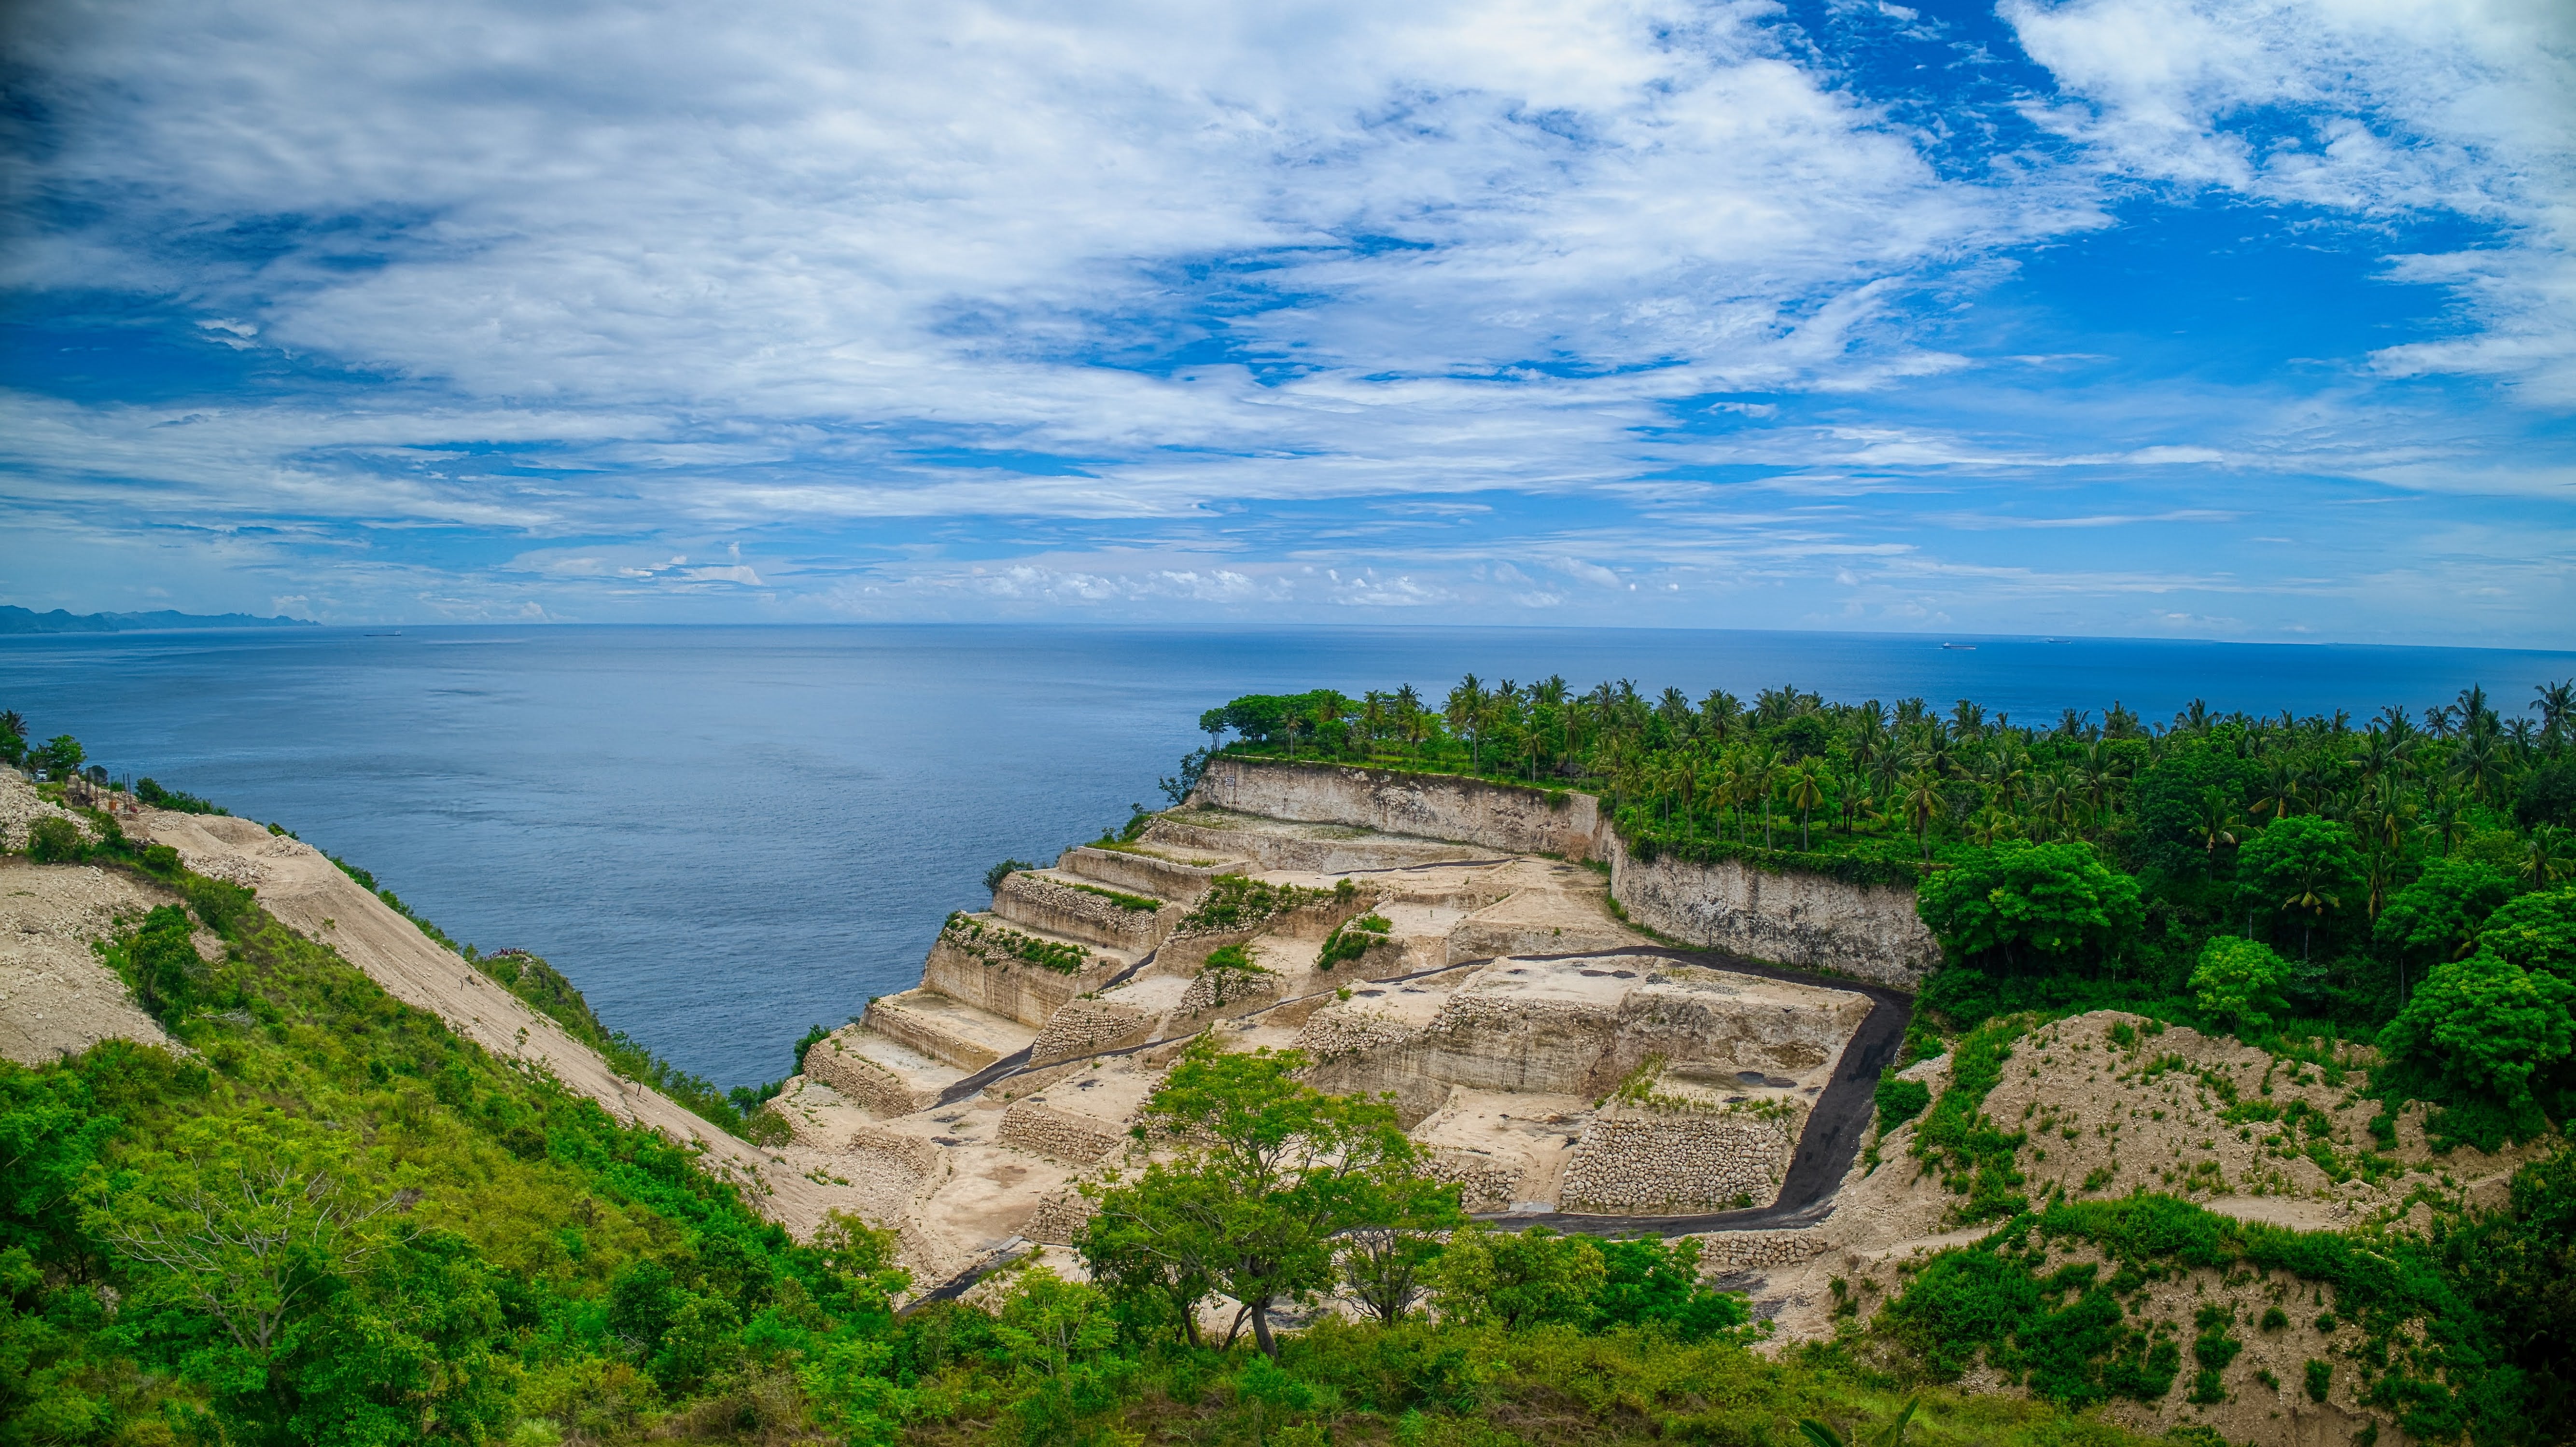 Nusa Penida kavling tanah dijual Atuh Beach Los Tebing (Cliff)